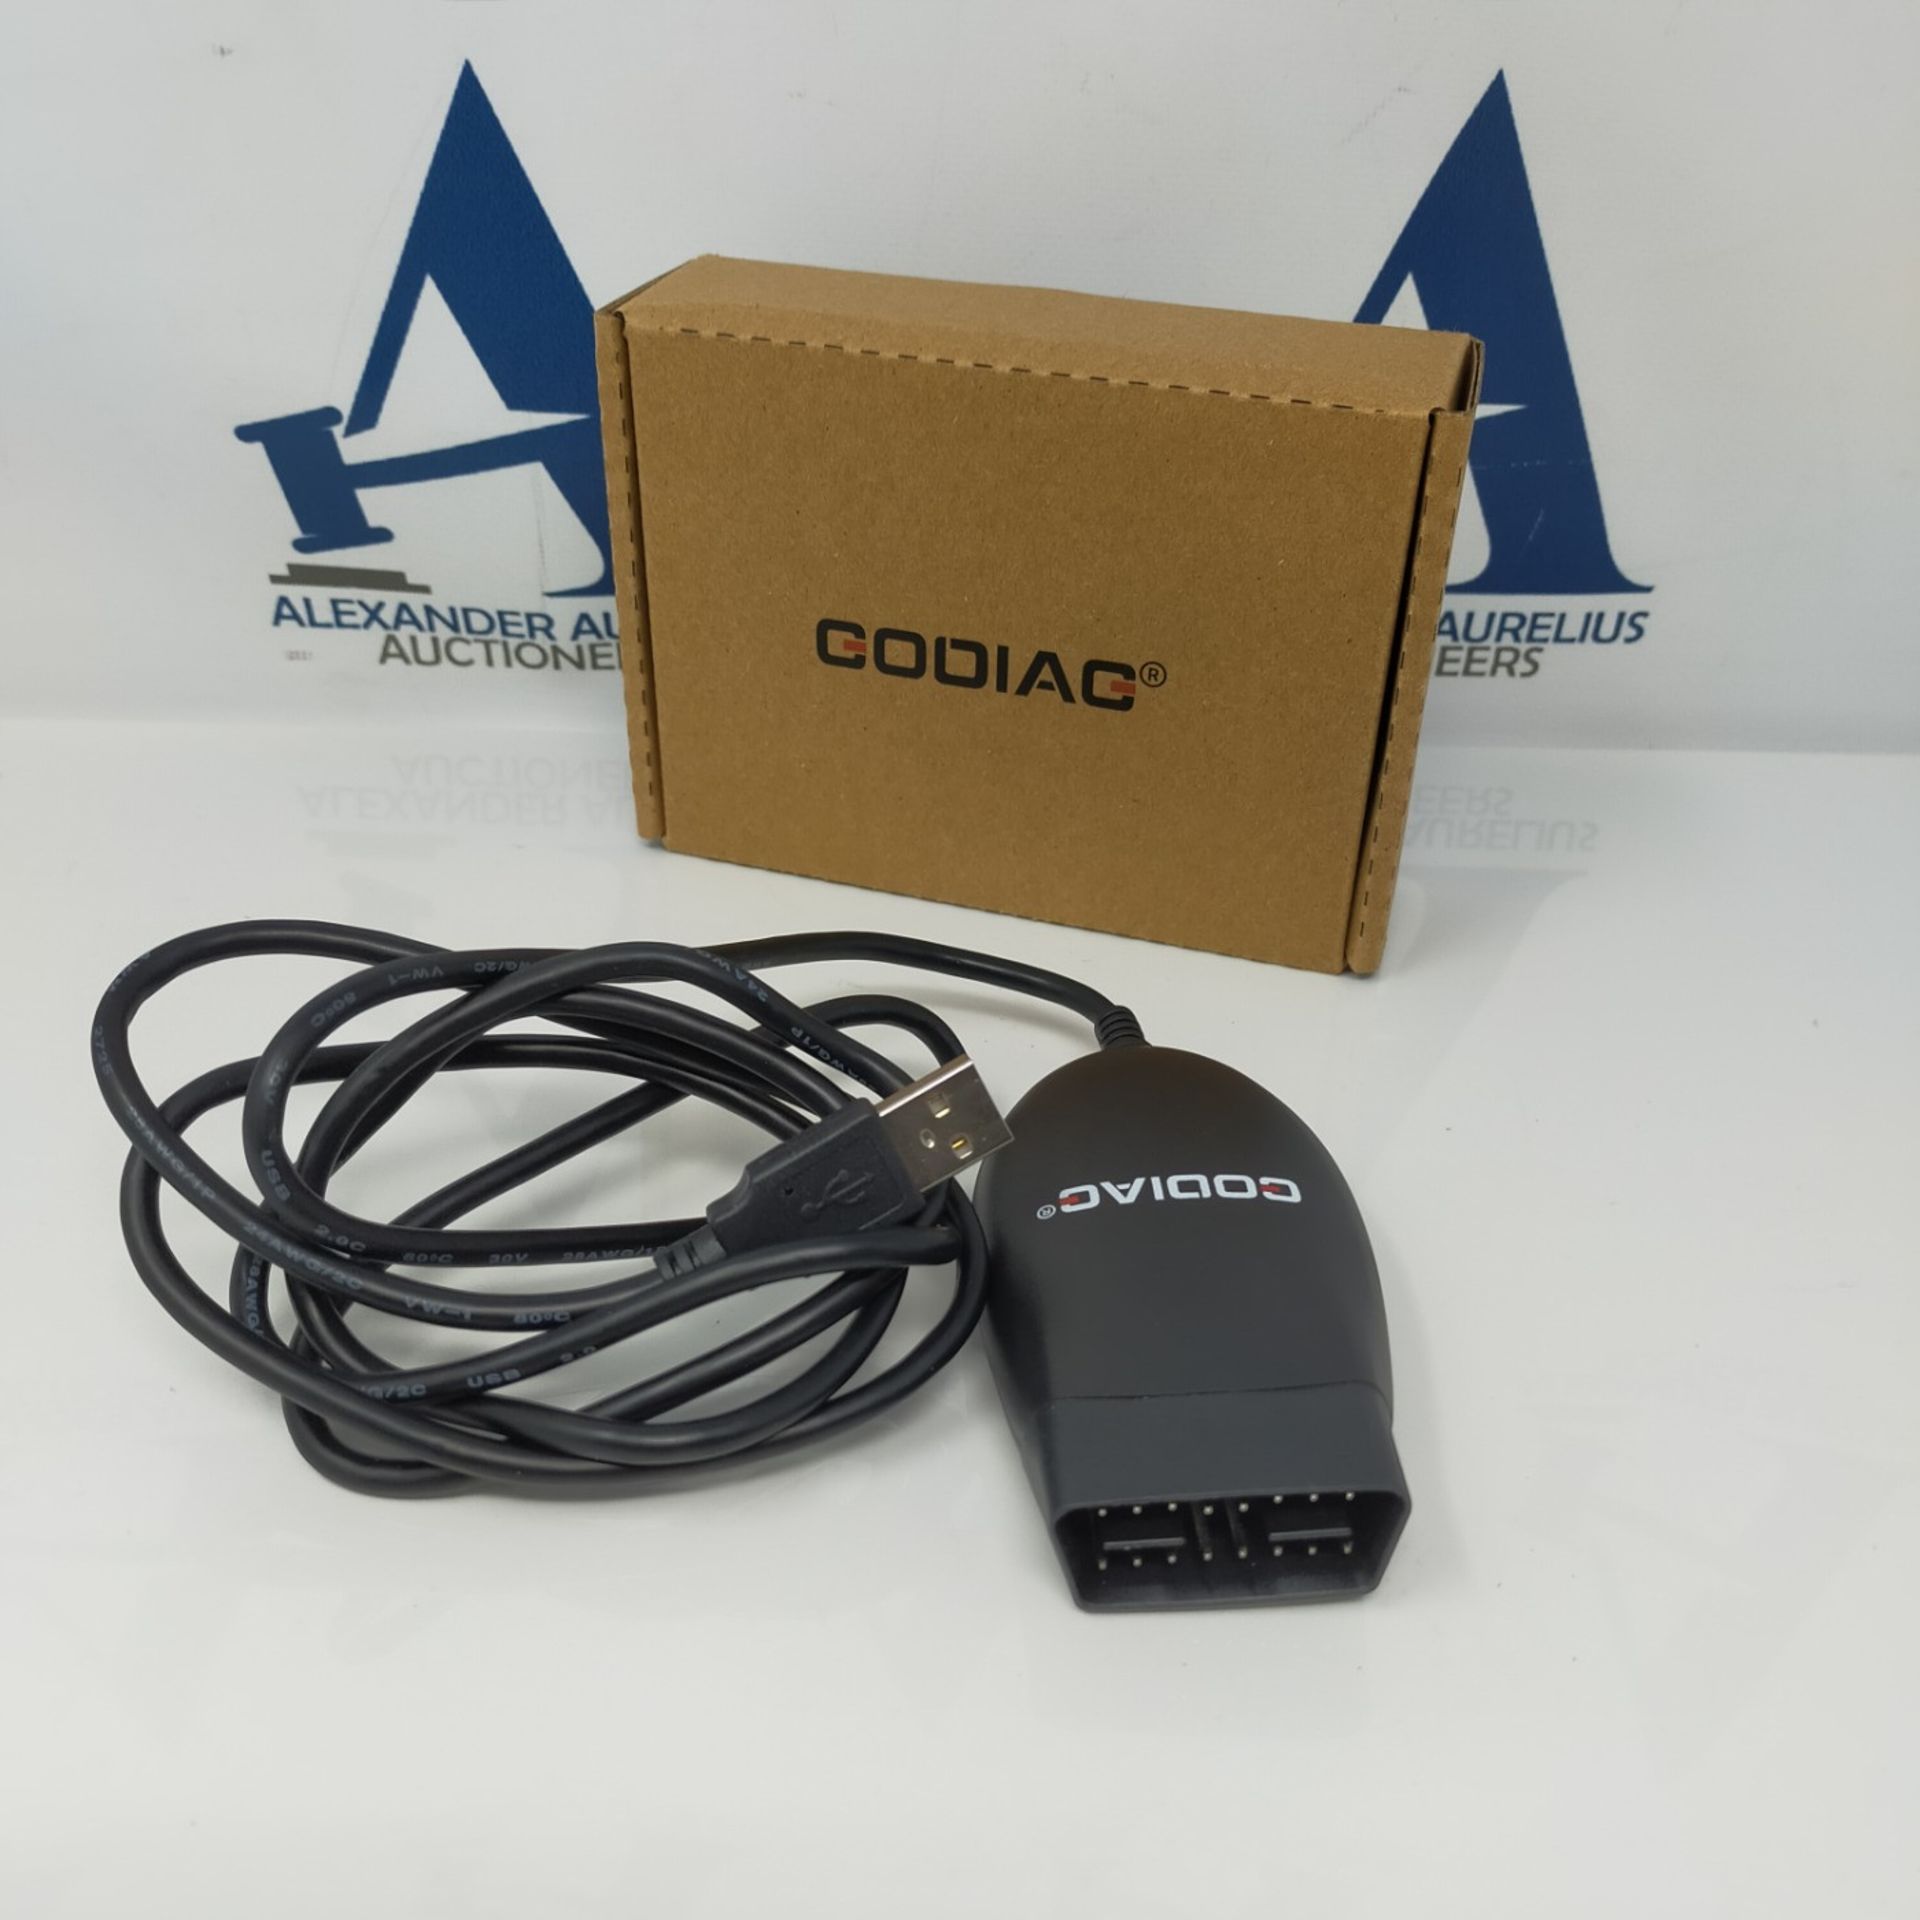 J2534 Openport 2.0 Cable, GODIAG OBD2 USB Adapter ECU Diagnostic Tool, Flash Chip Tunn - Image 4 of 8